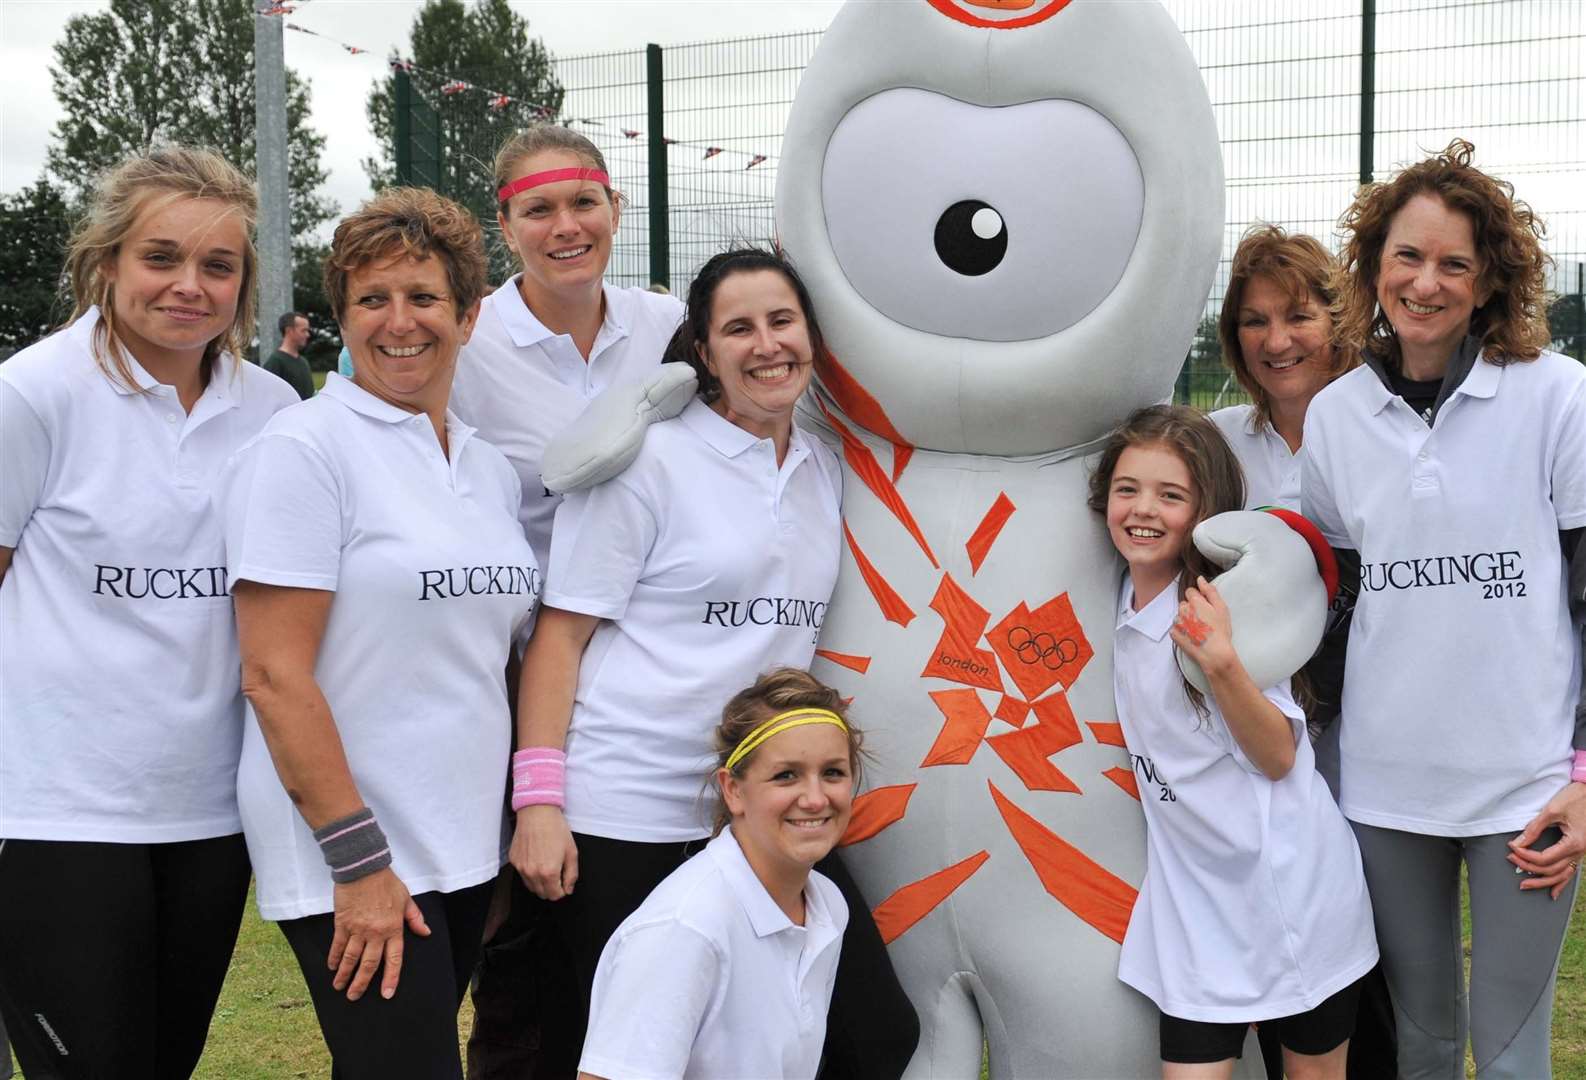 The Ruckinge netball team with Olympic mascot Wenlock